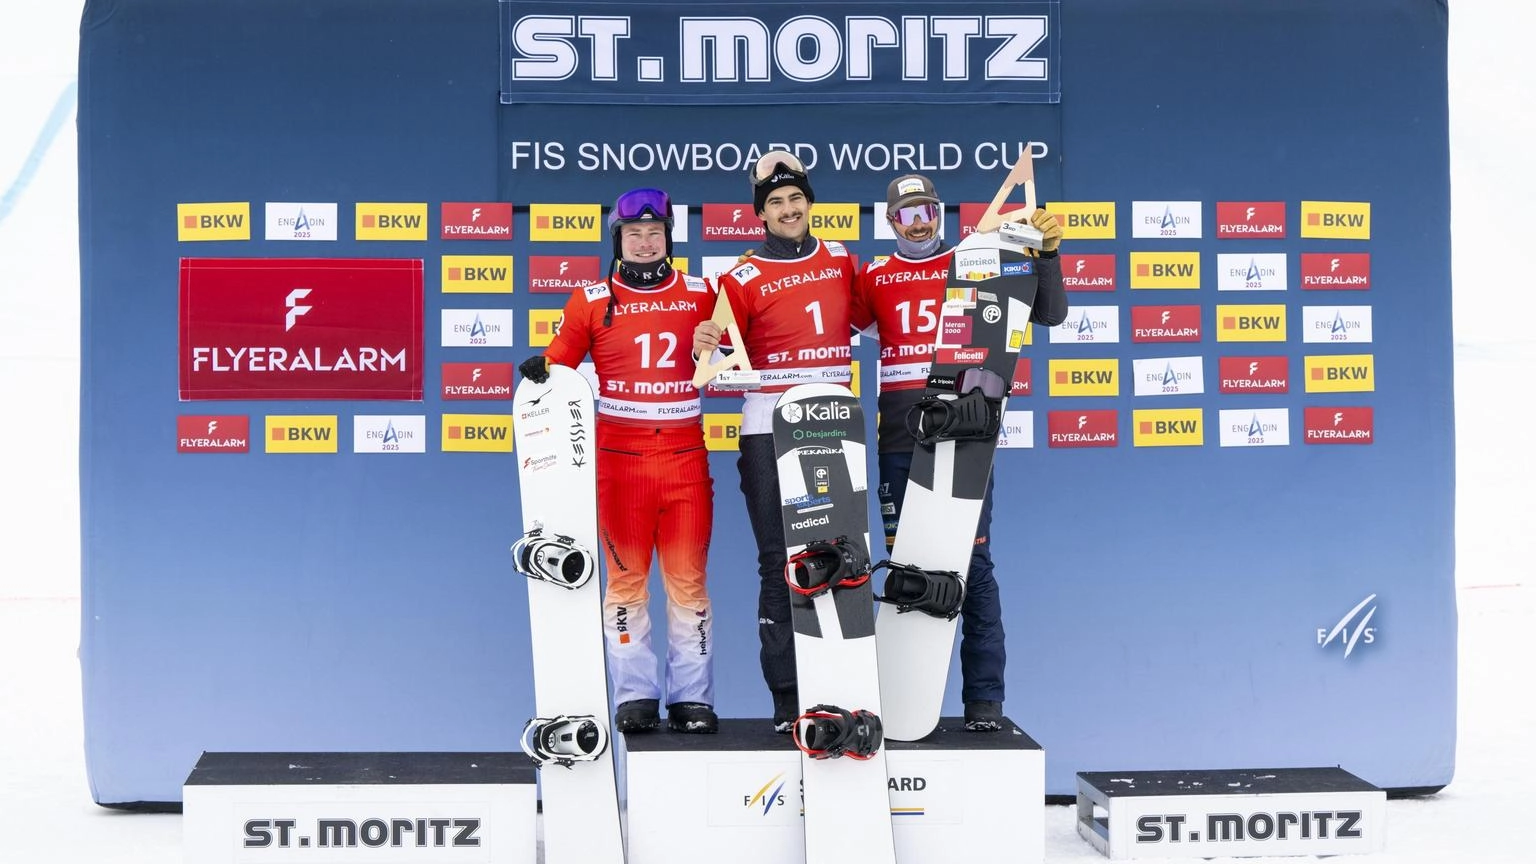 Snowboard: Visintin terzo in cdm a St.Moritz, Moioli quarta